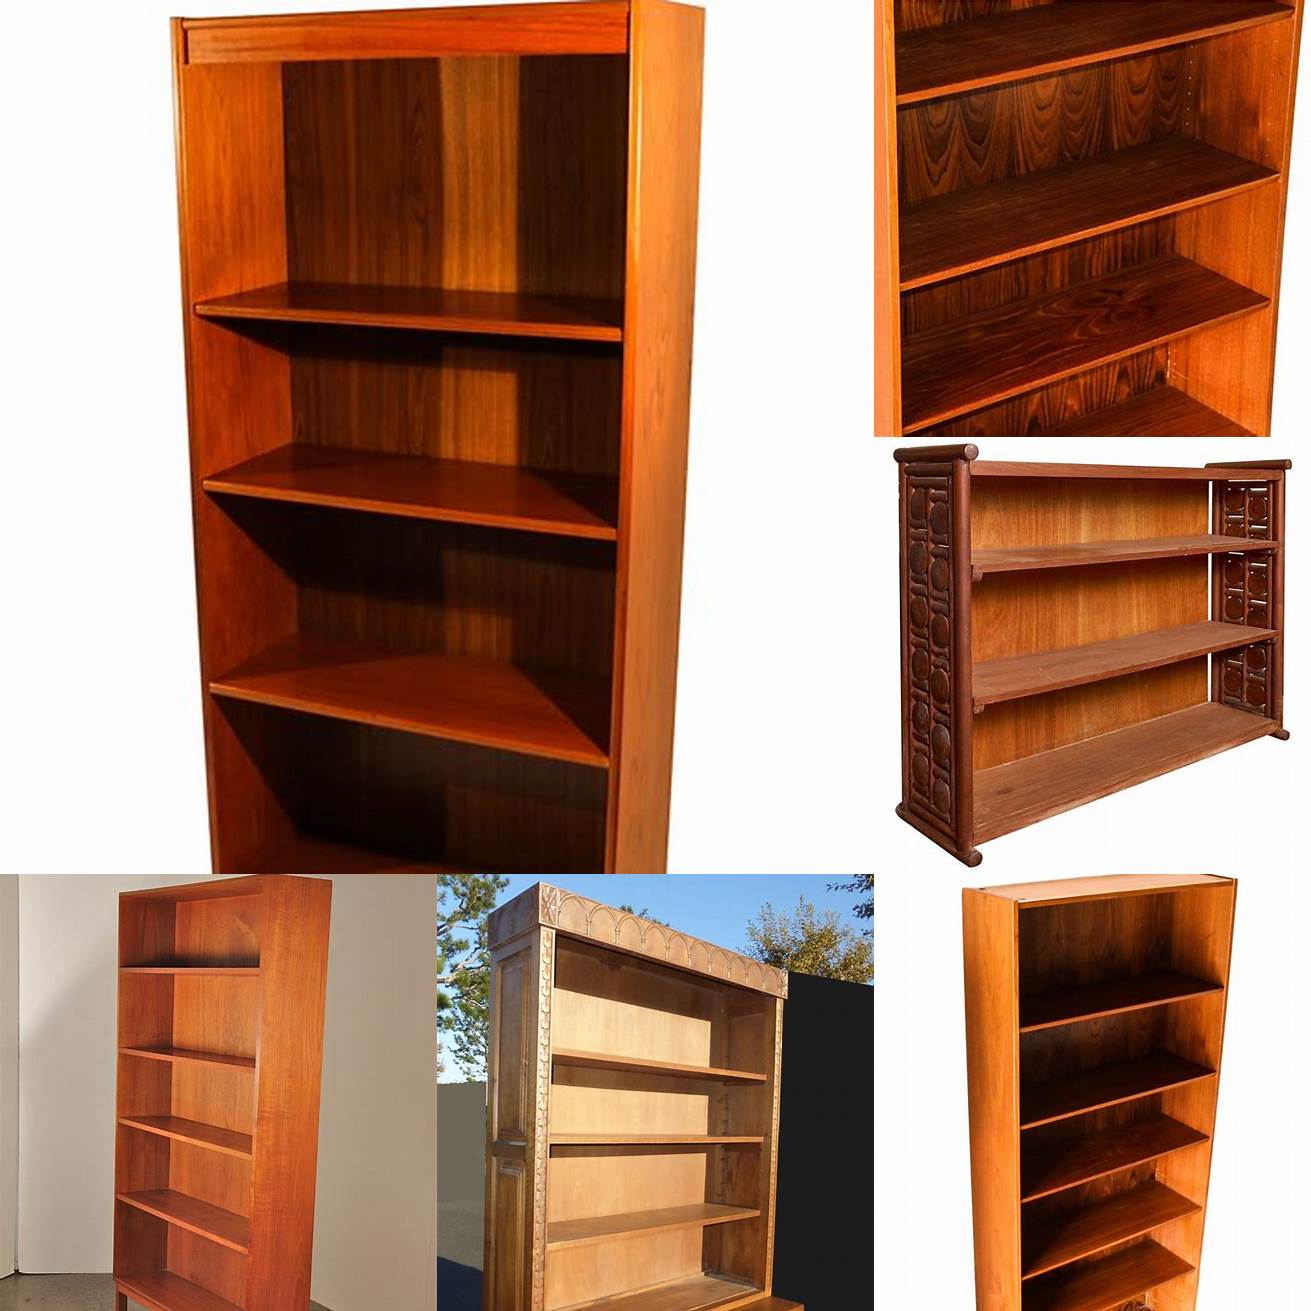 A contemporary teak bookcase